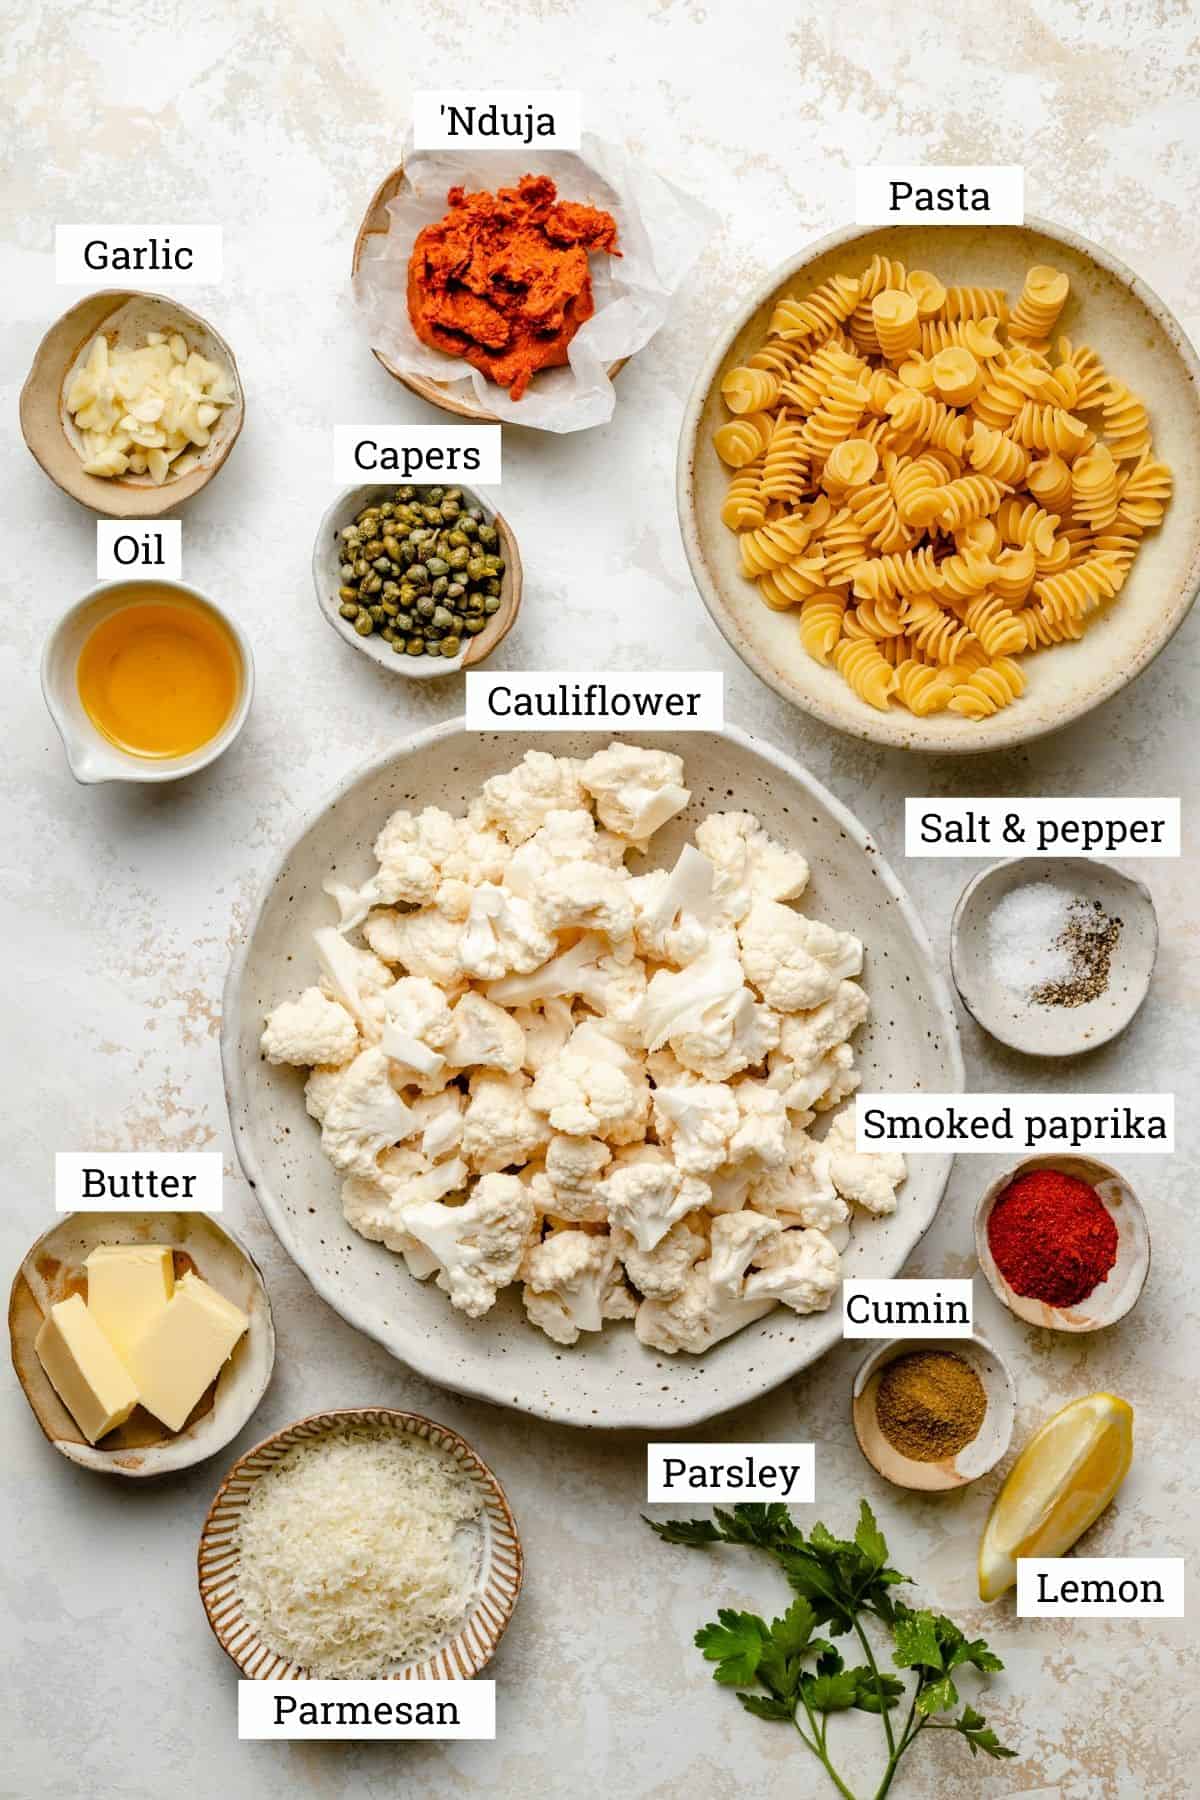 Ingredients for nduja pasta recipe in various bowls.